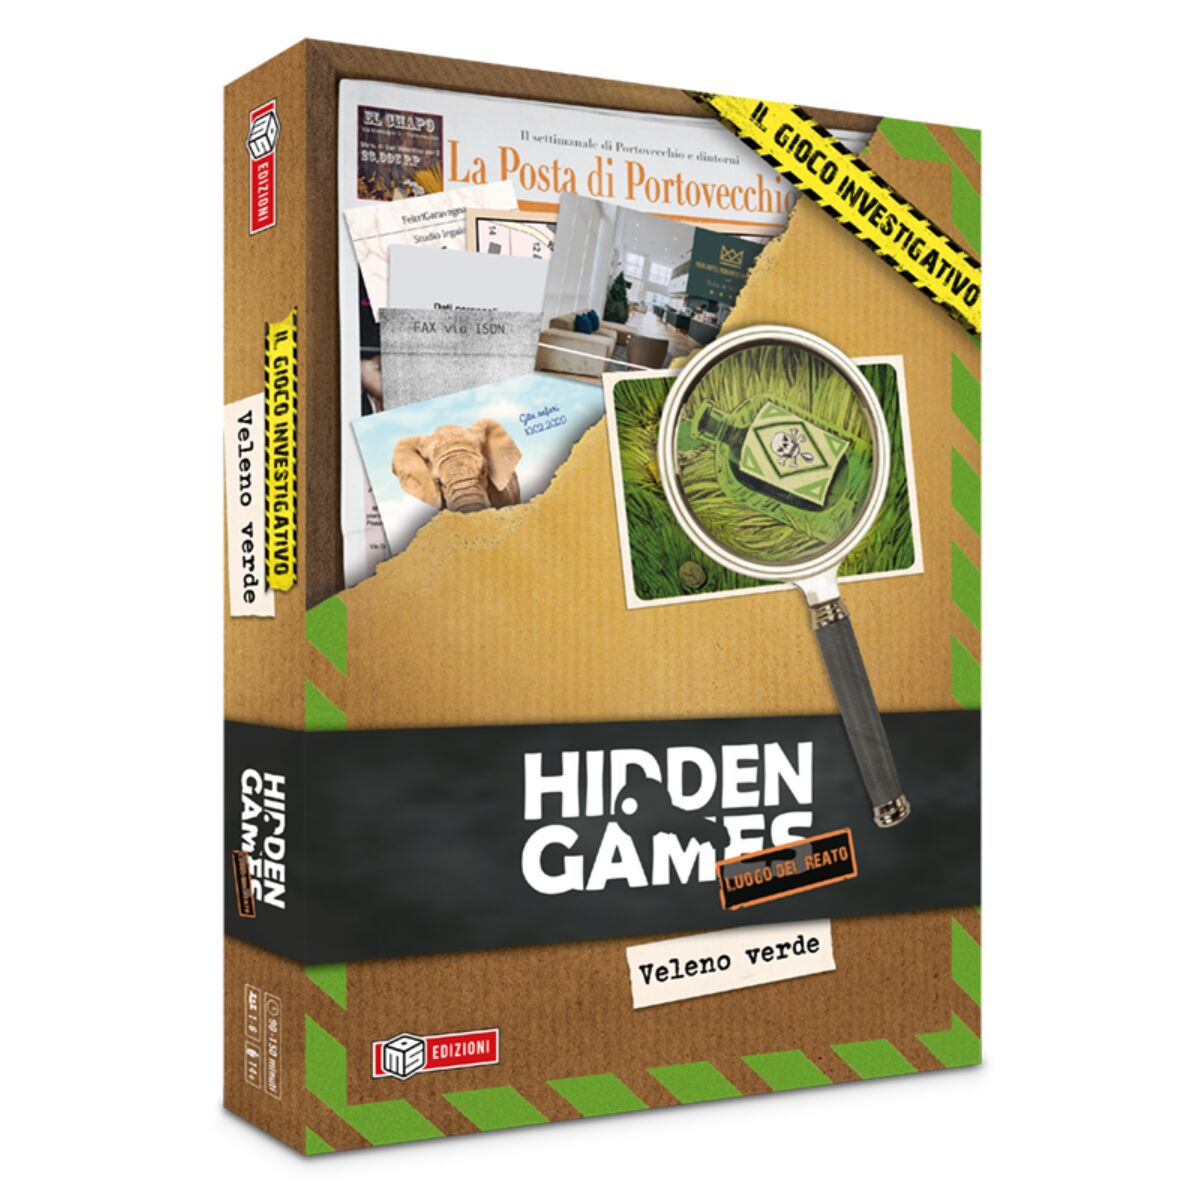 Veleno Verde - Hidden Games gioco da tavolo